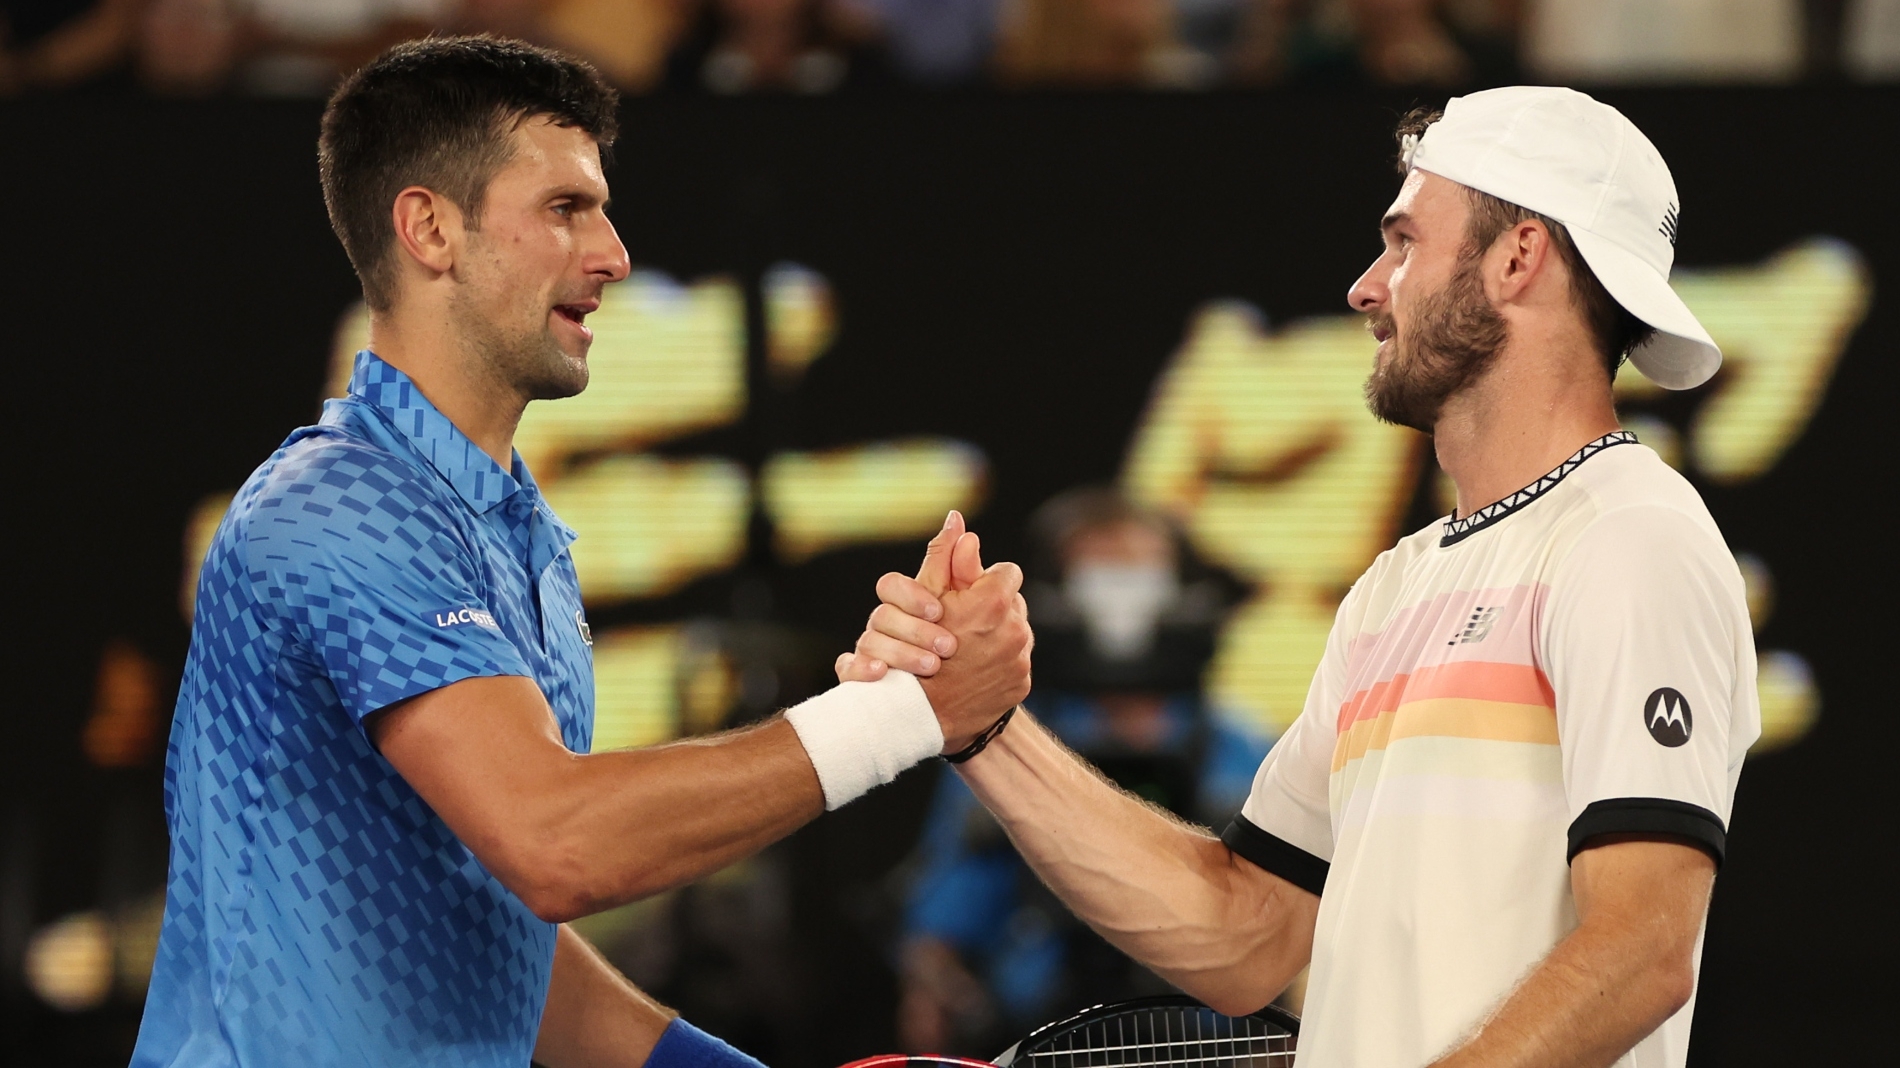 Djokovic ends Paul's Australian Open dream run in the semifinals